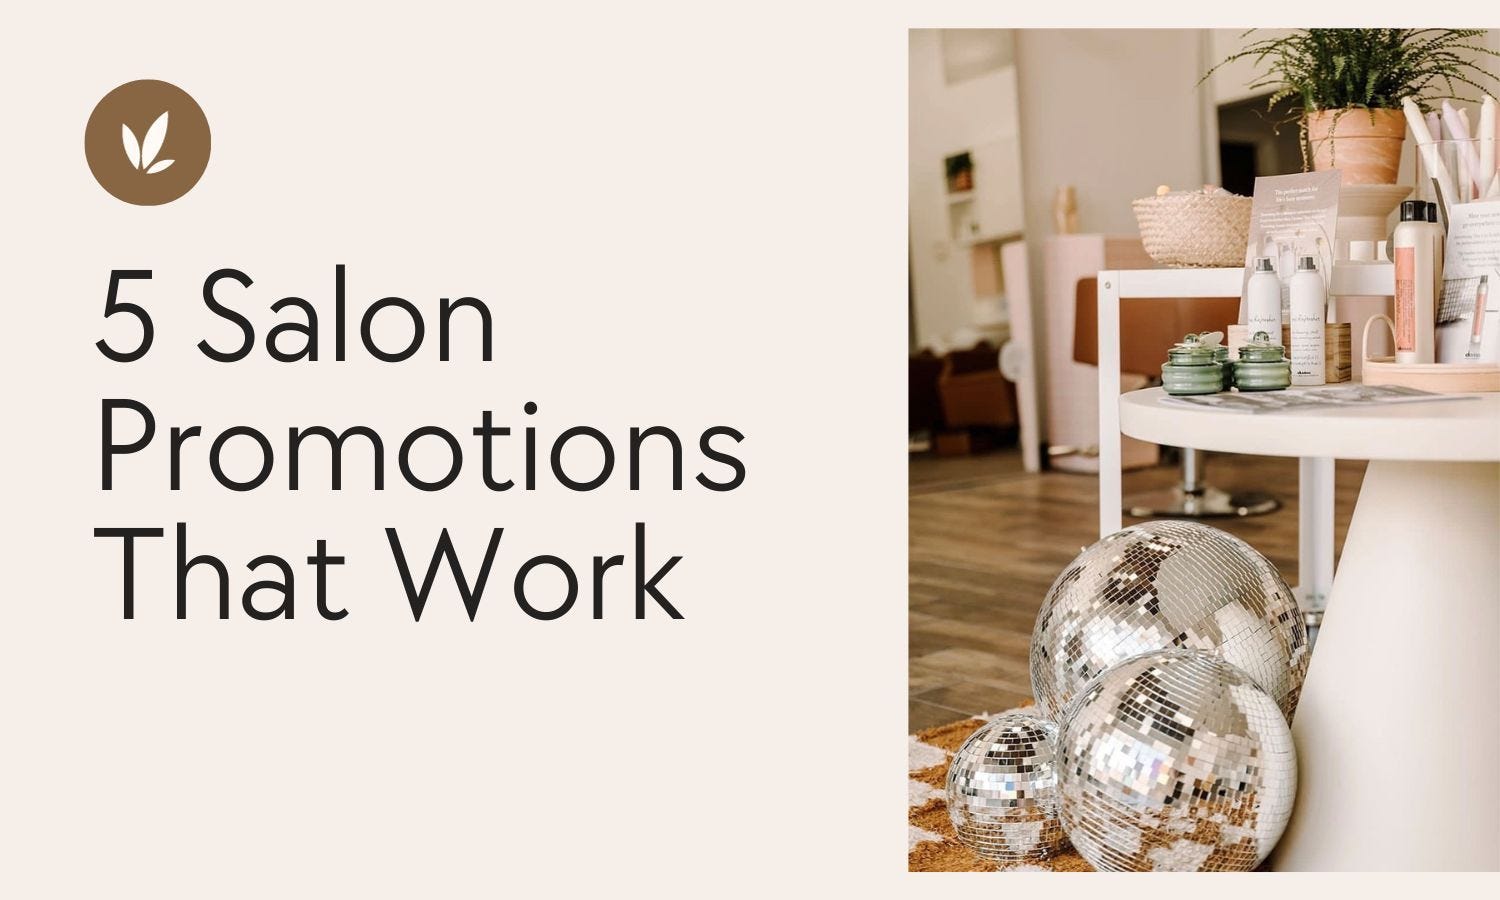 5 salon promotions that work